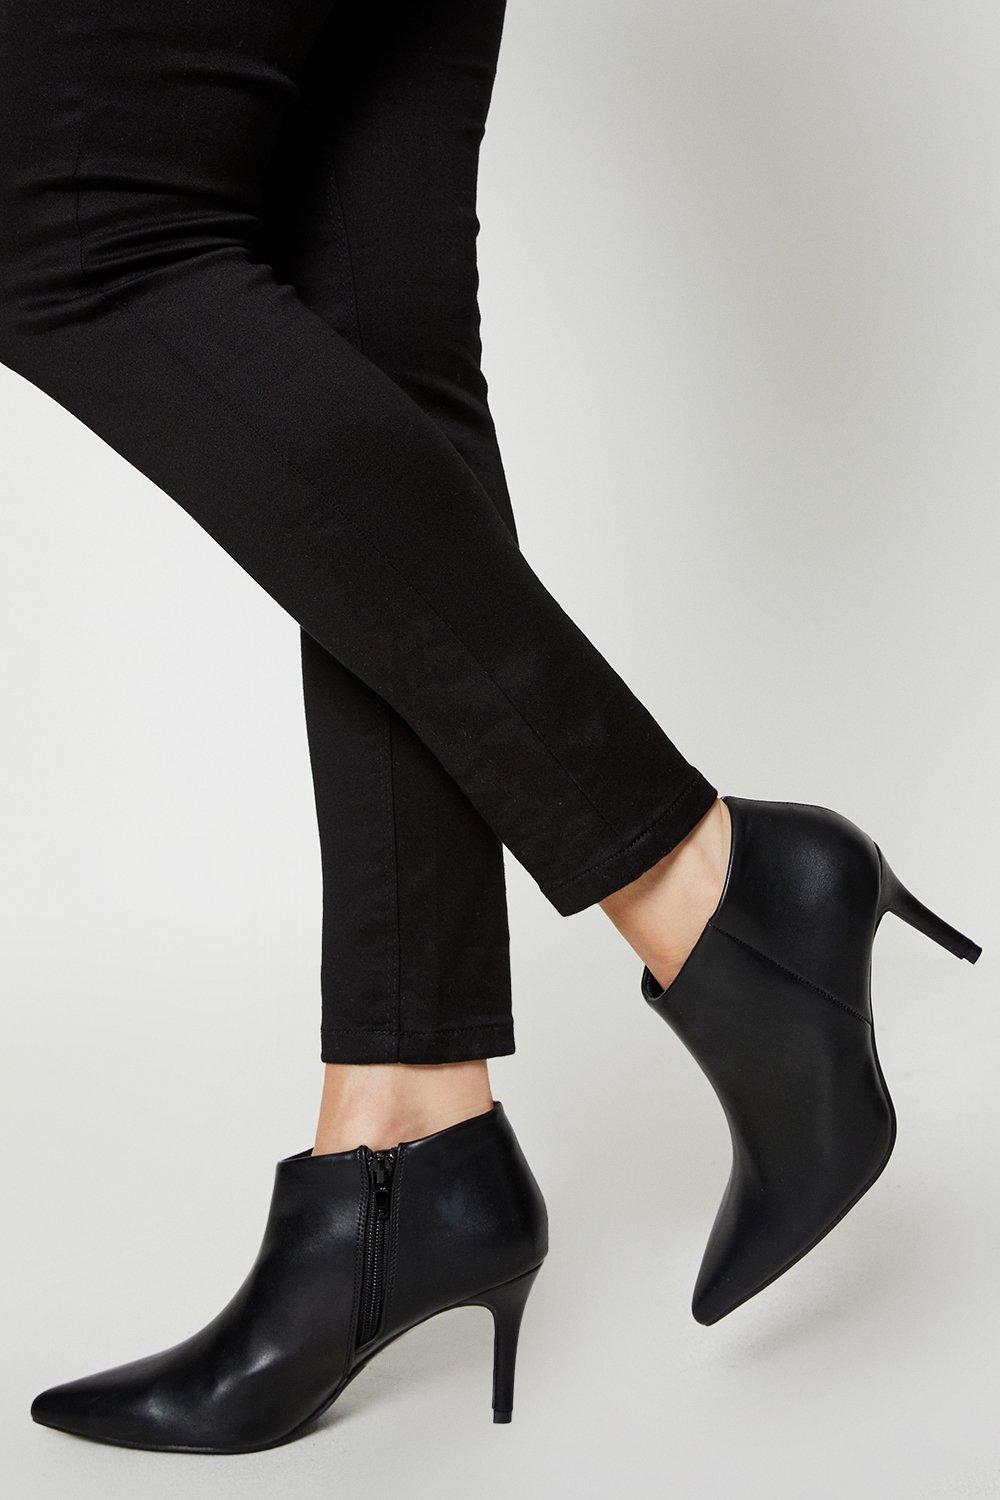 Women’s Principles: Odette Pointed Stiletto Heel Shoe Boots - black - 5